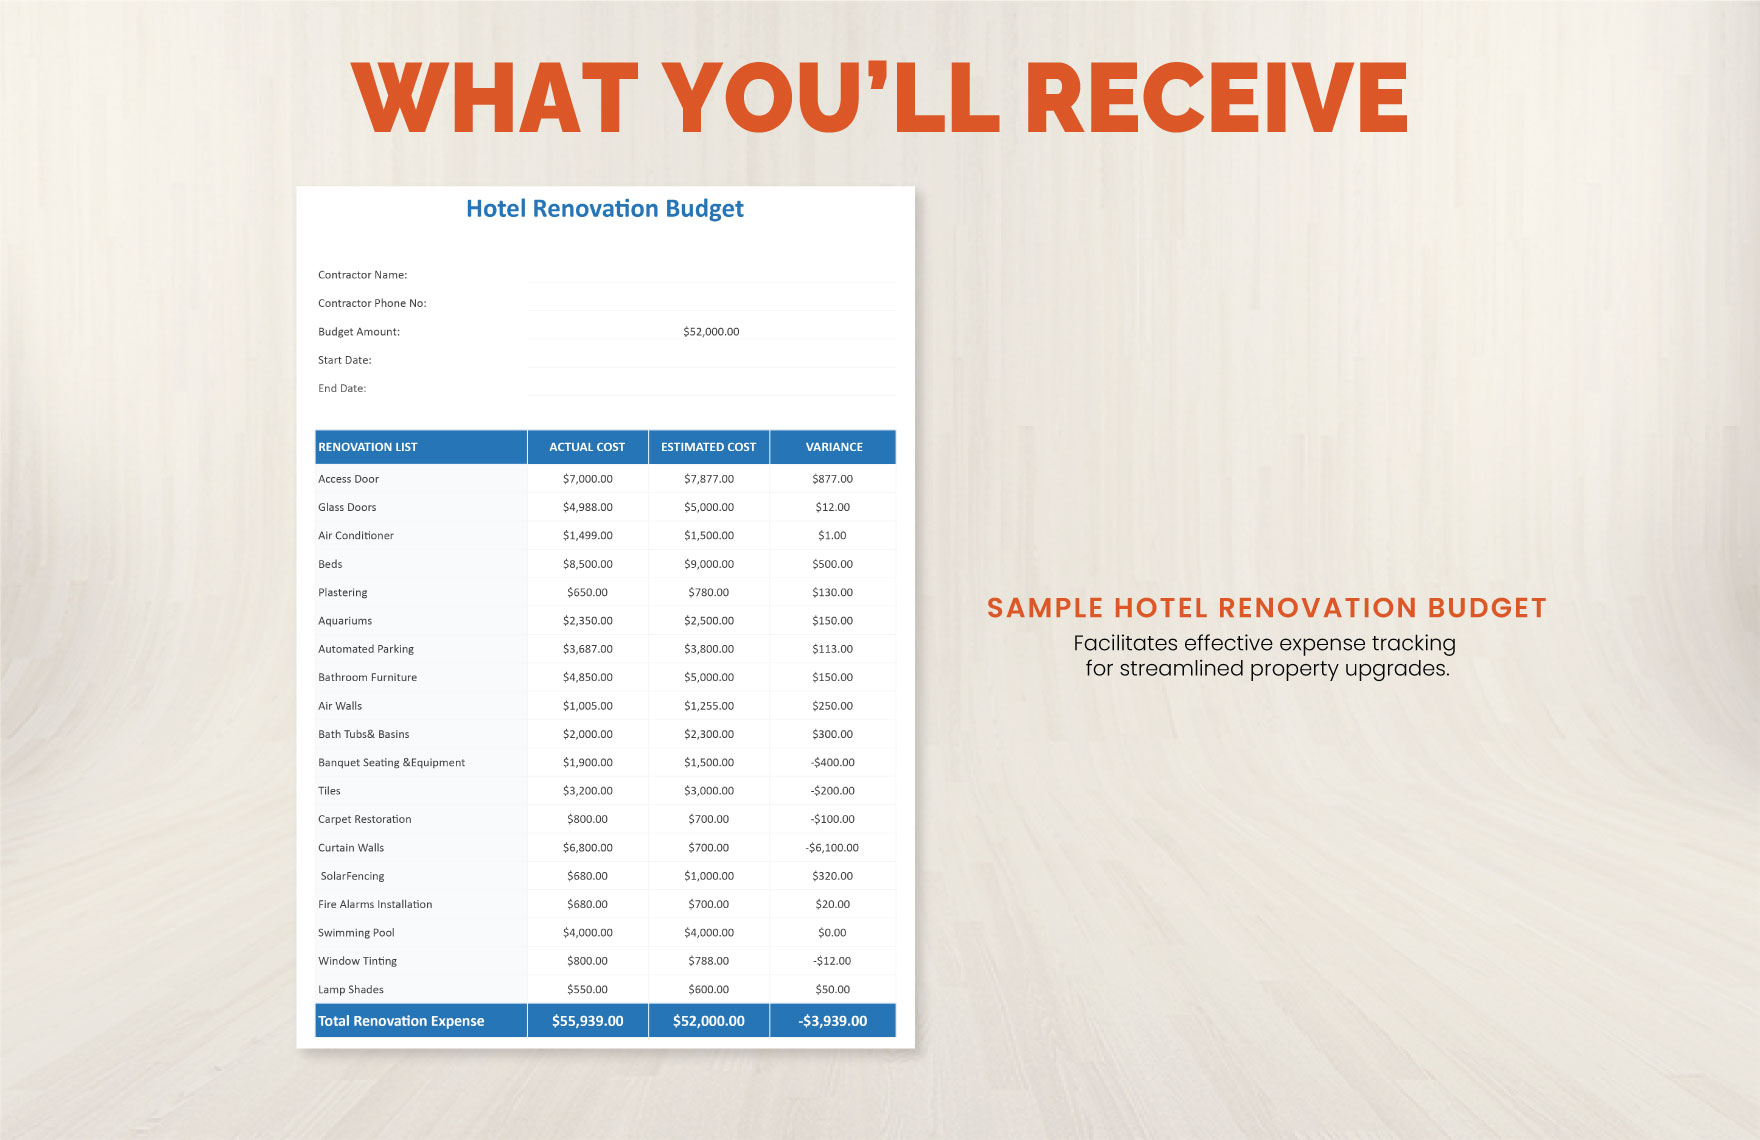 Sample Hotel Renovation Budget Template